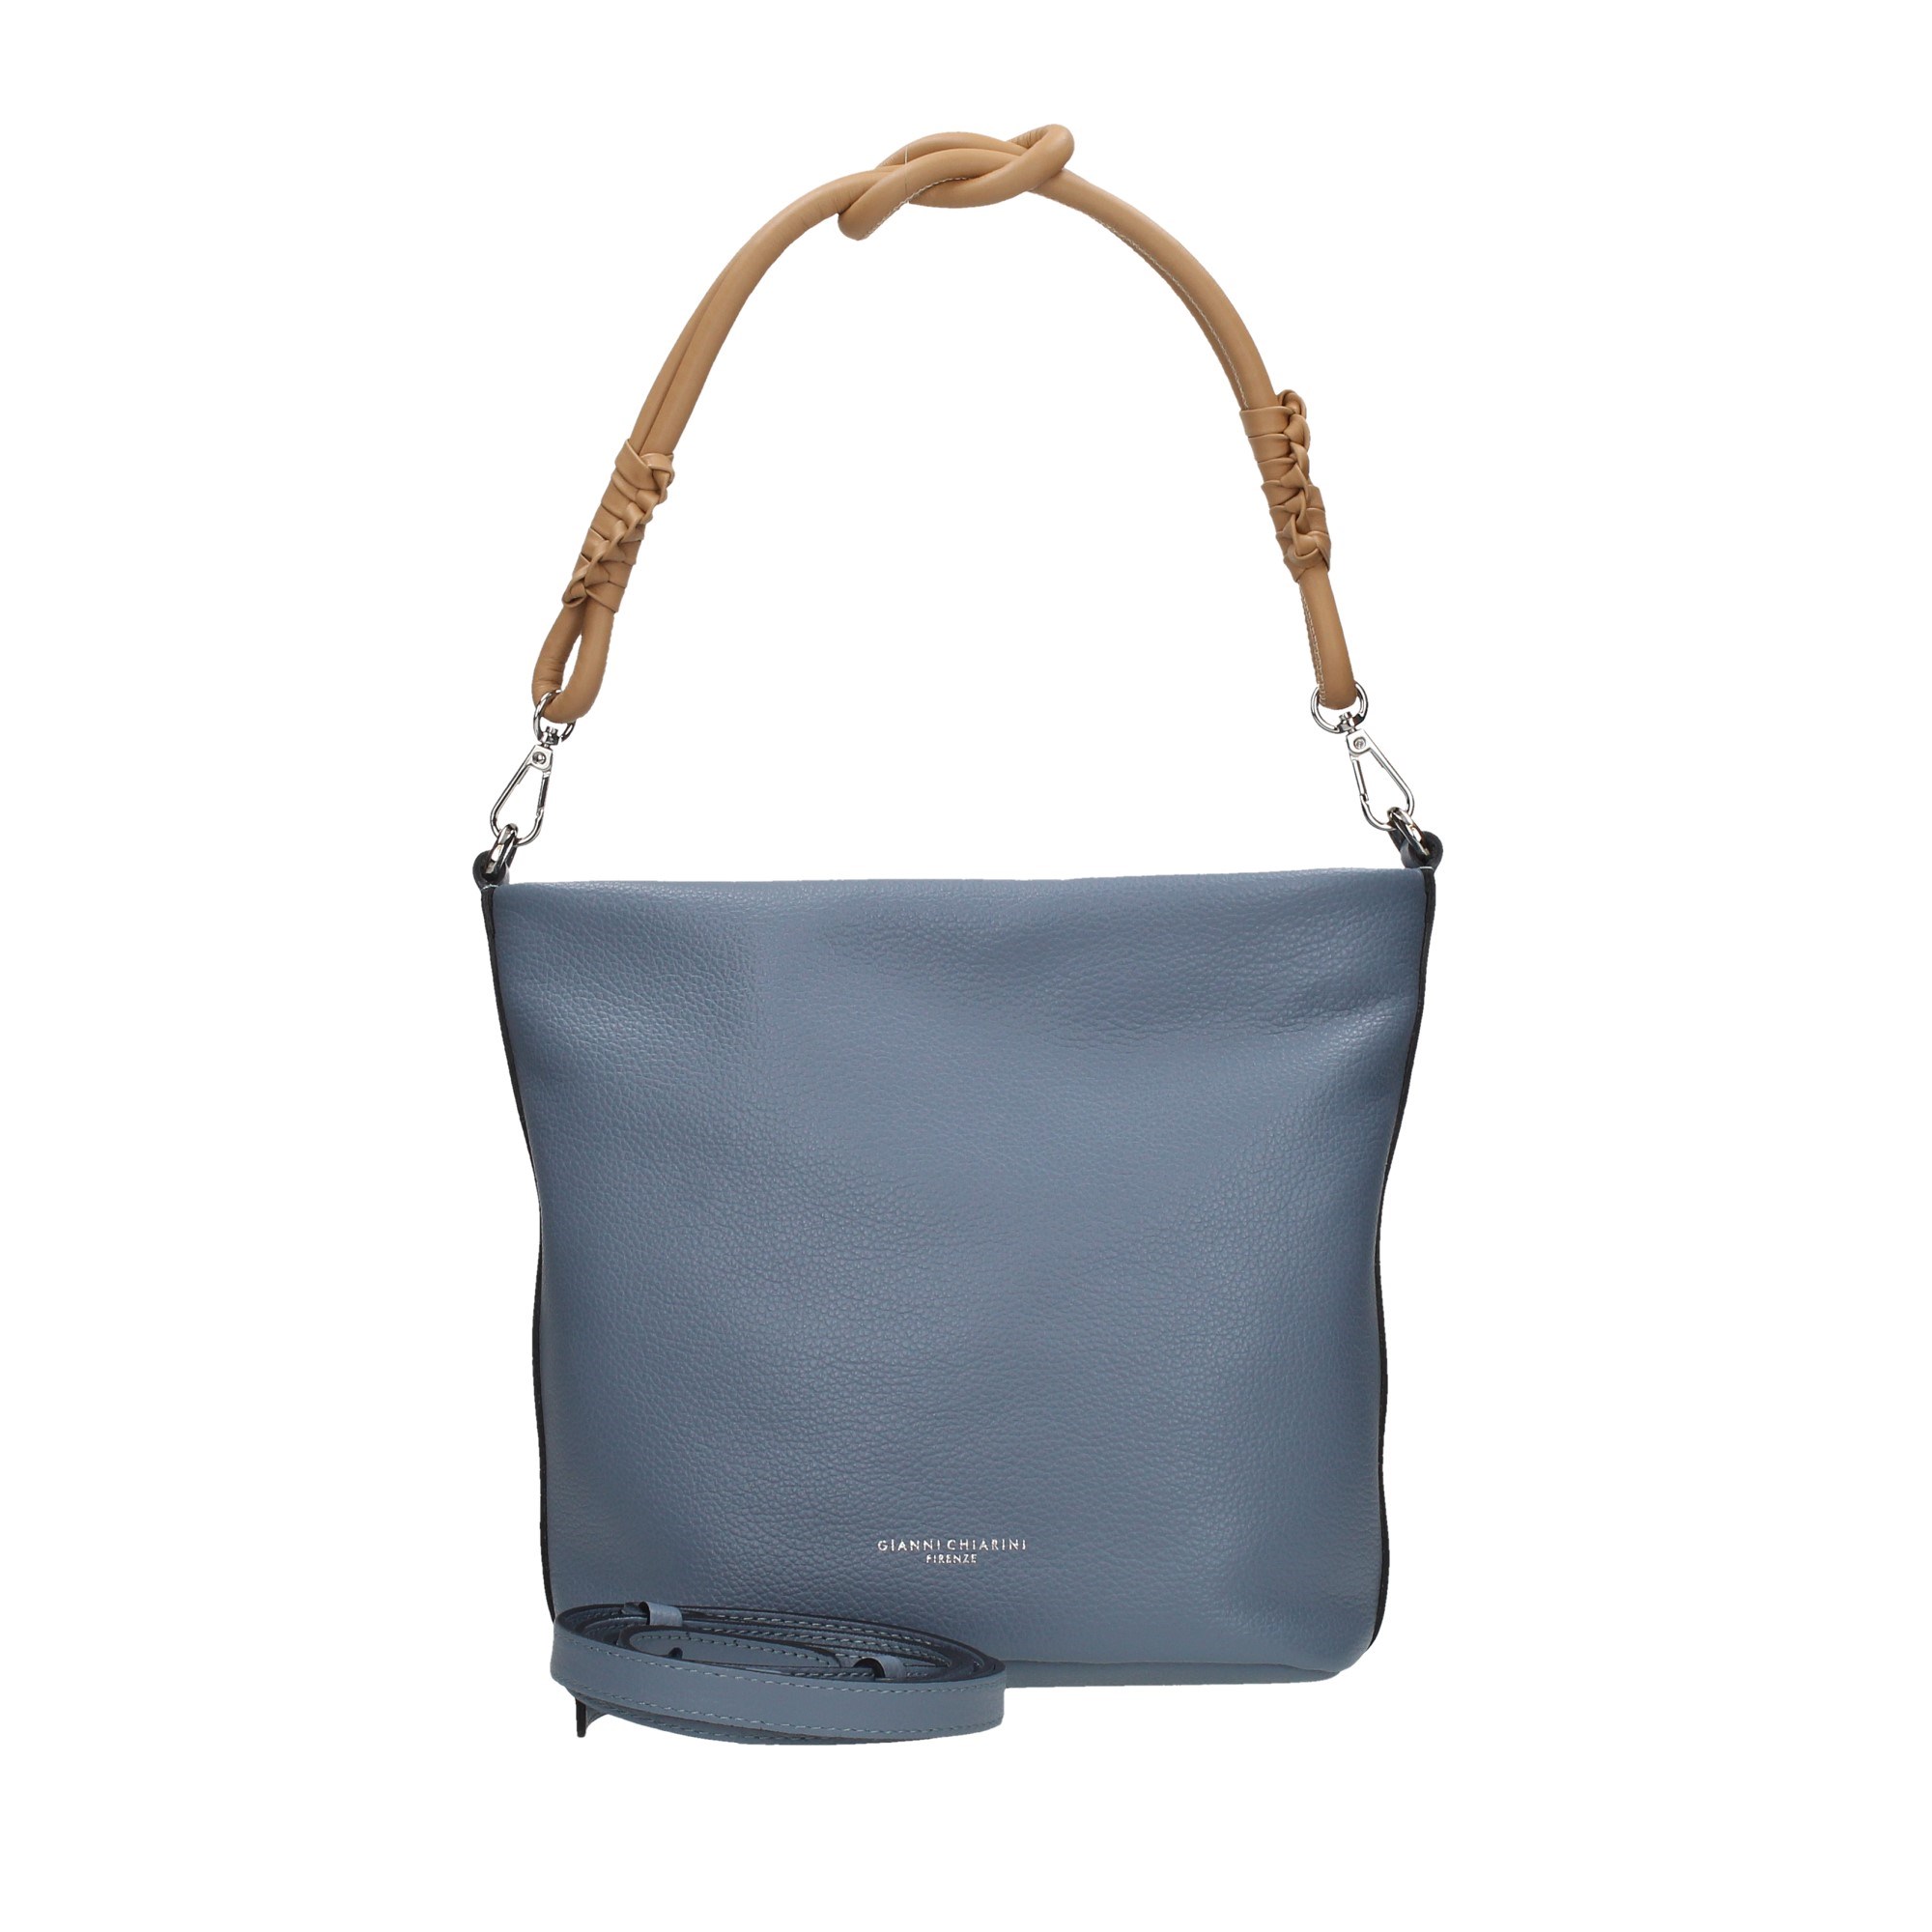 Gianni Chiarini Accessories Women Shoulder Bags BS9600 OLX